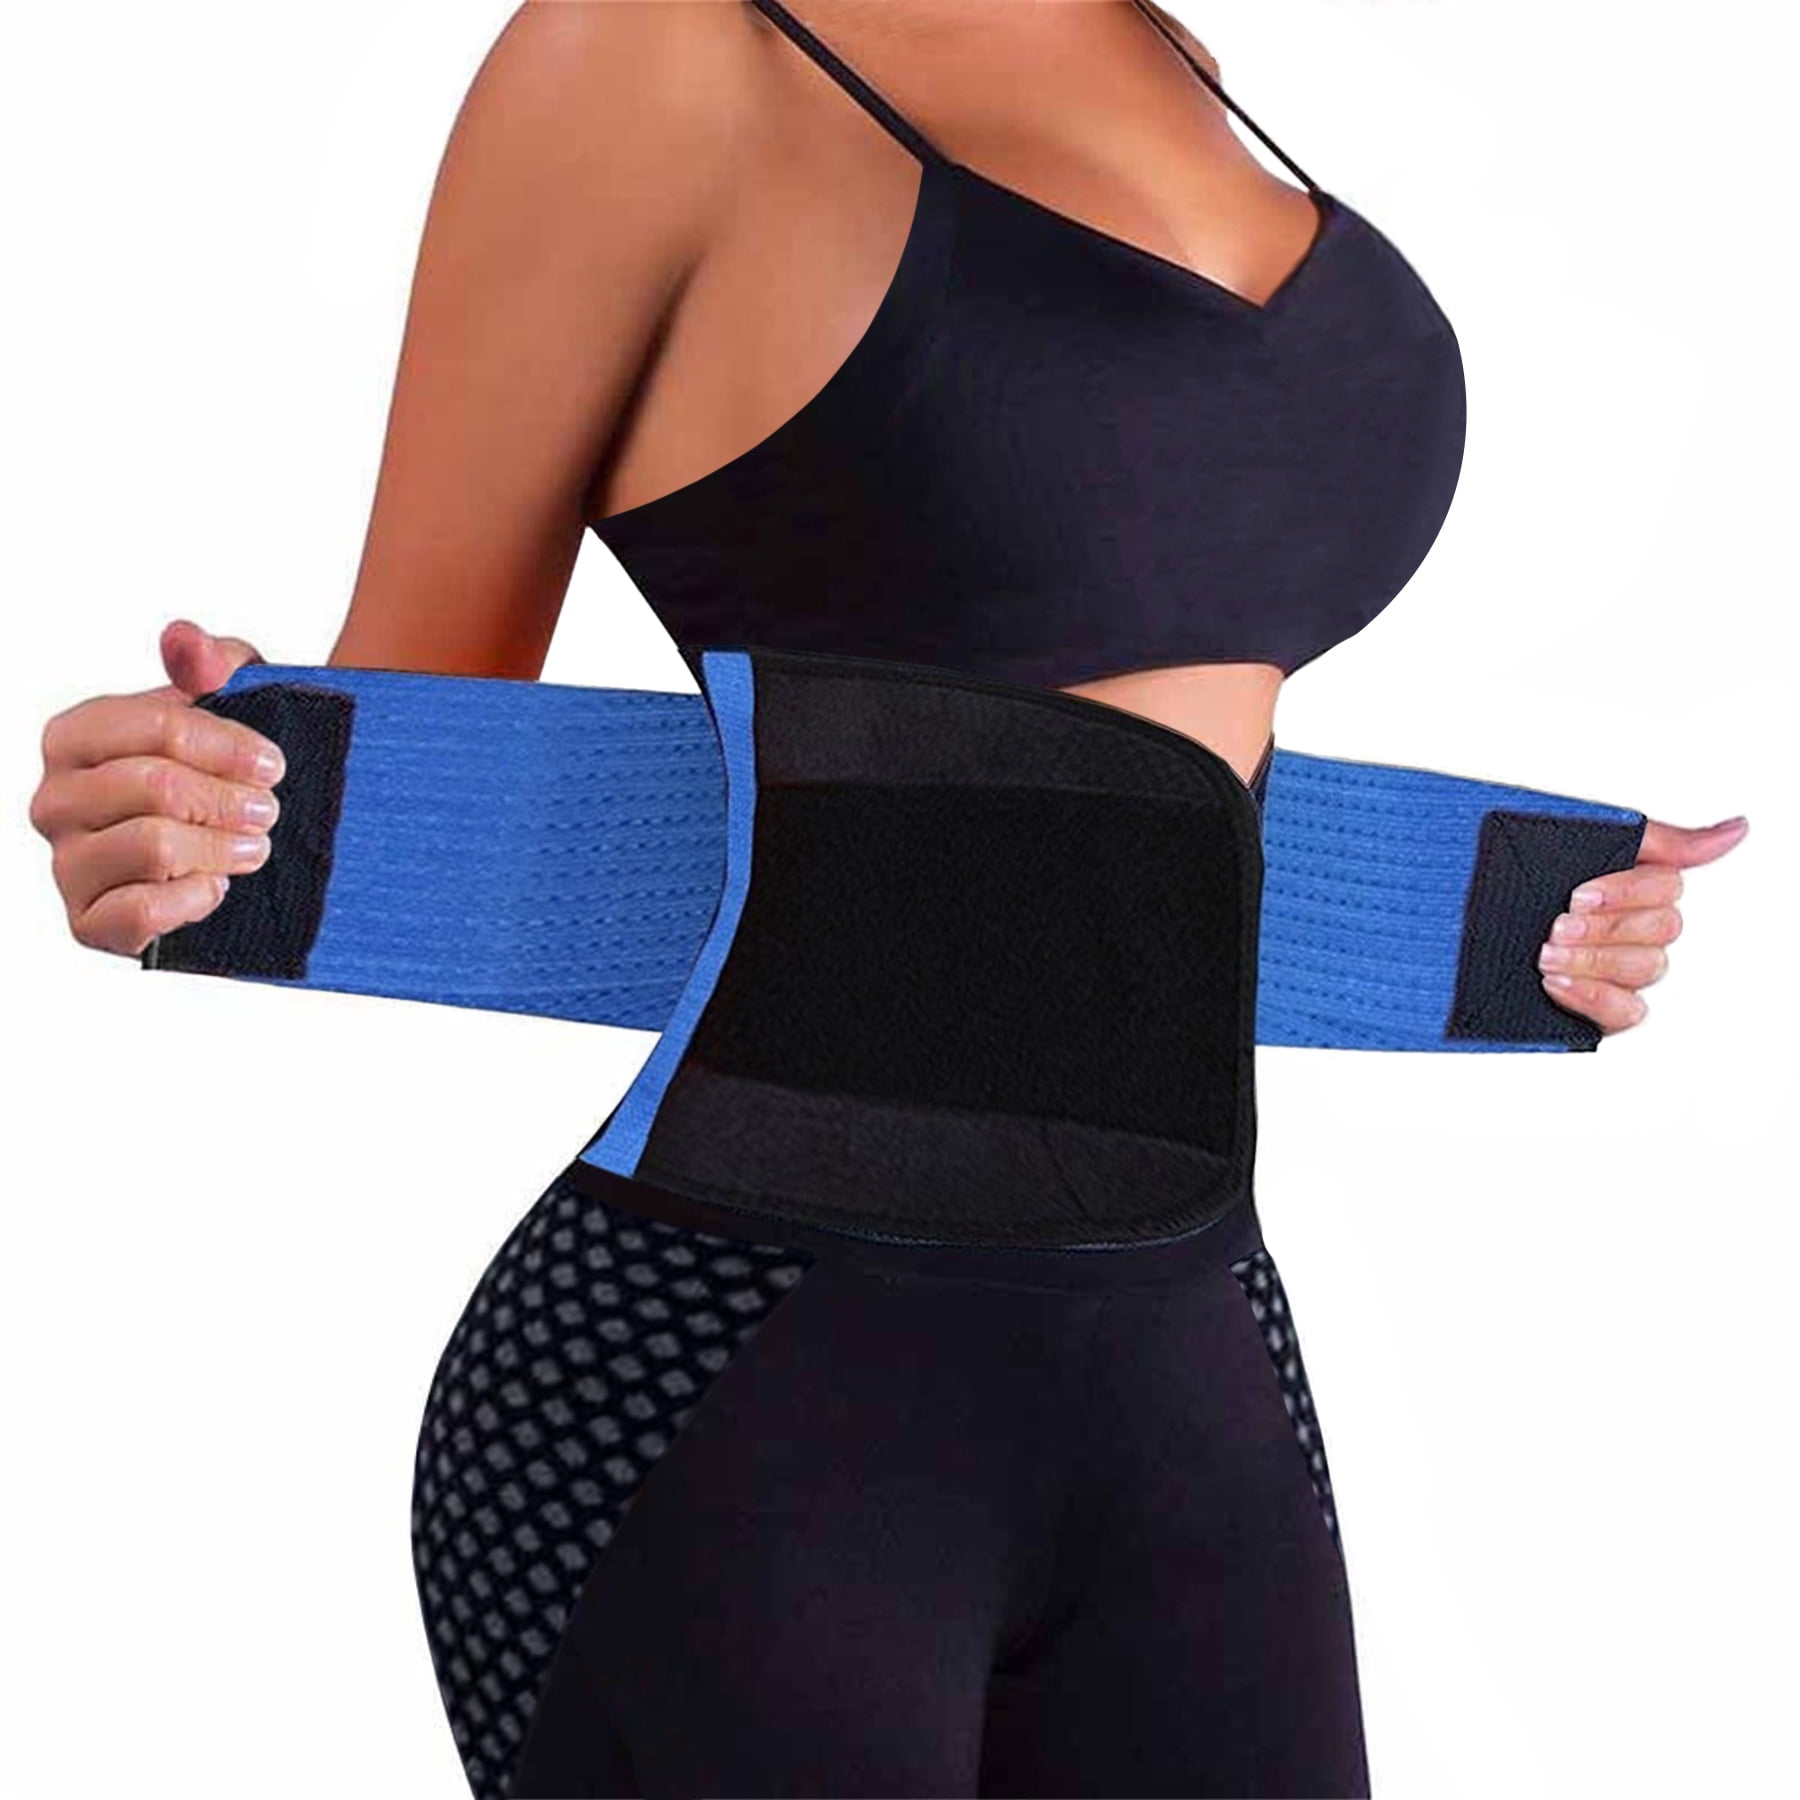 Details about   Women's Waist Trainer Corset Belt WeightLoss Tummy Control Slimming Body Shaper 